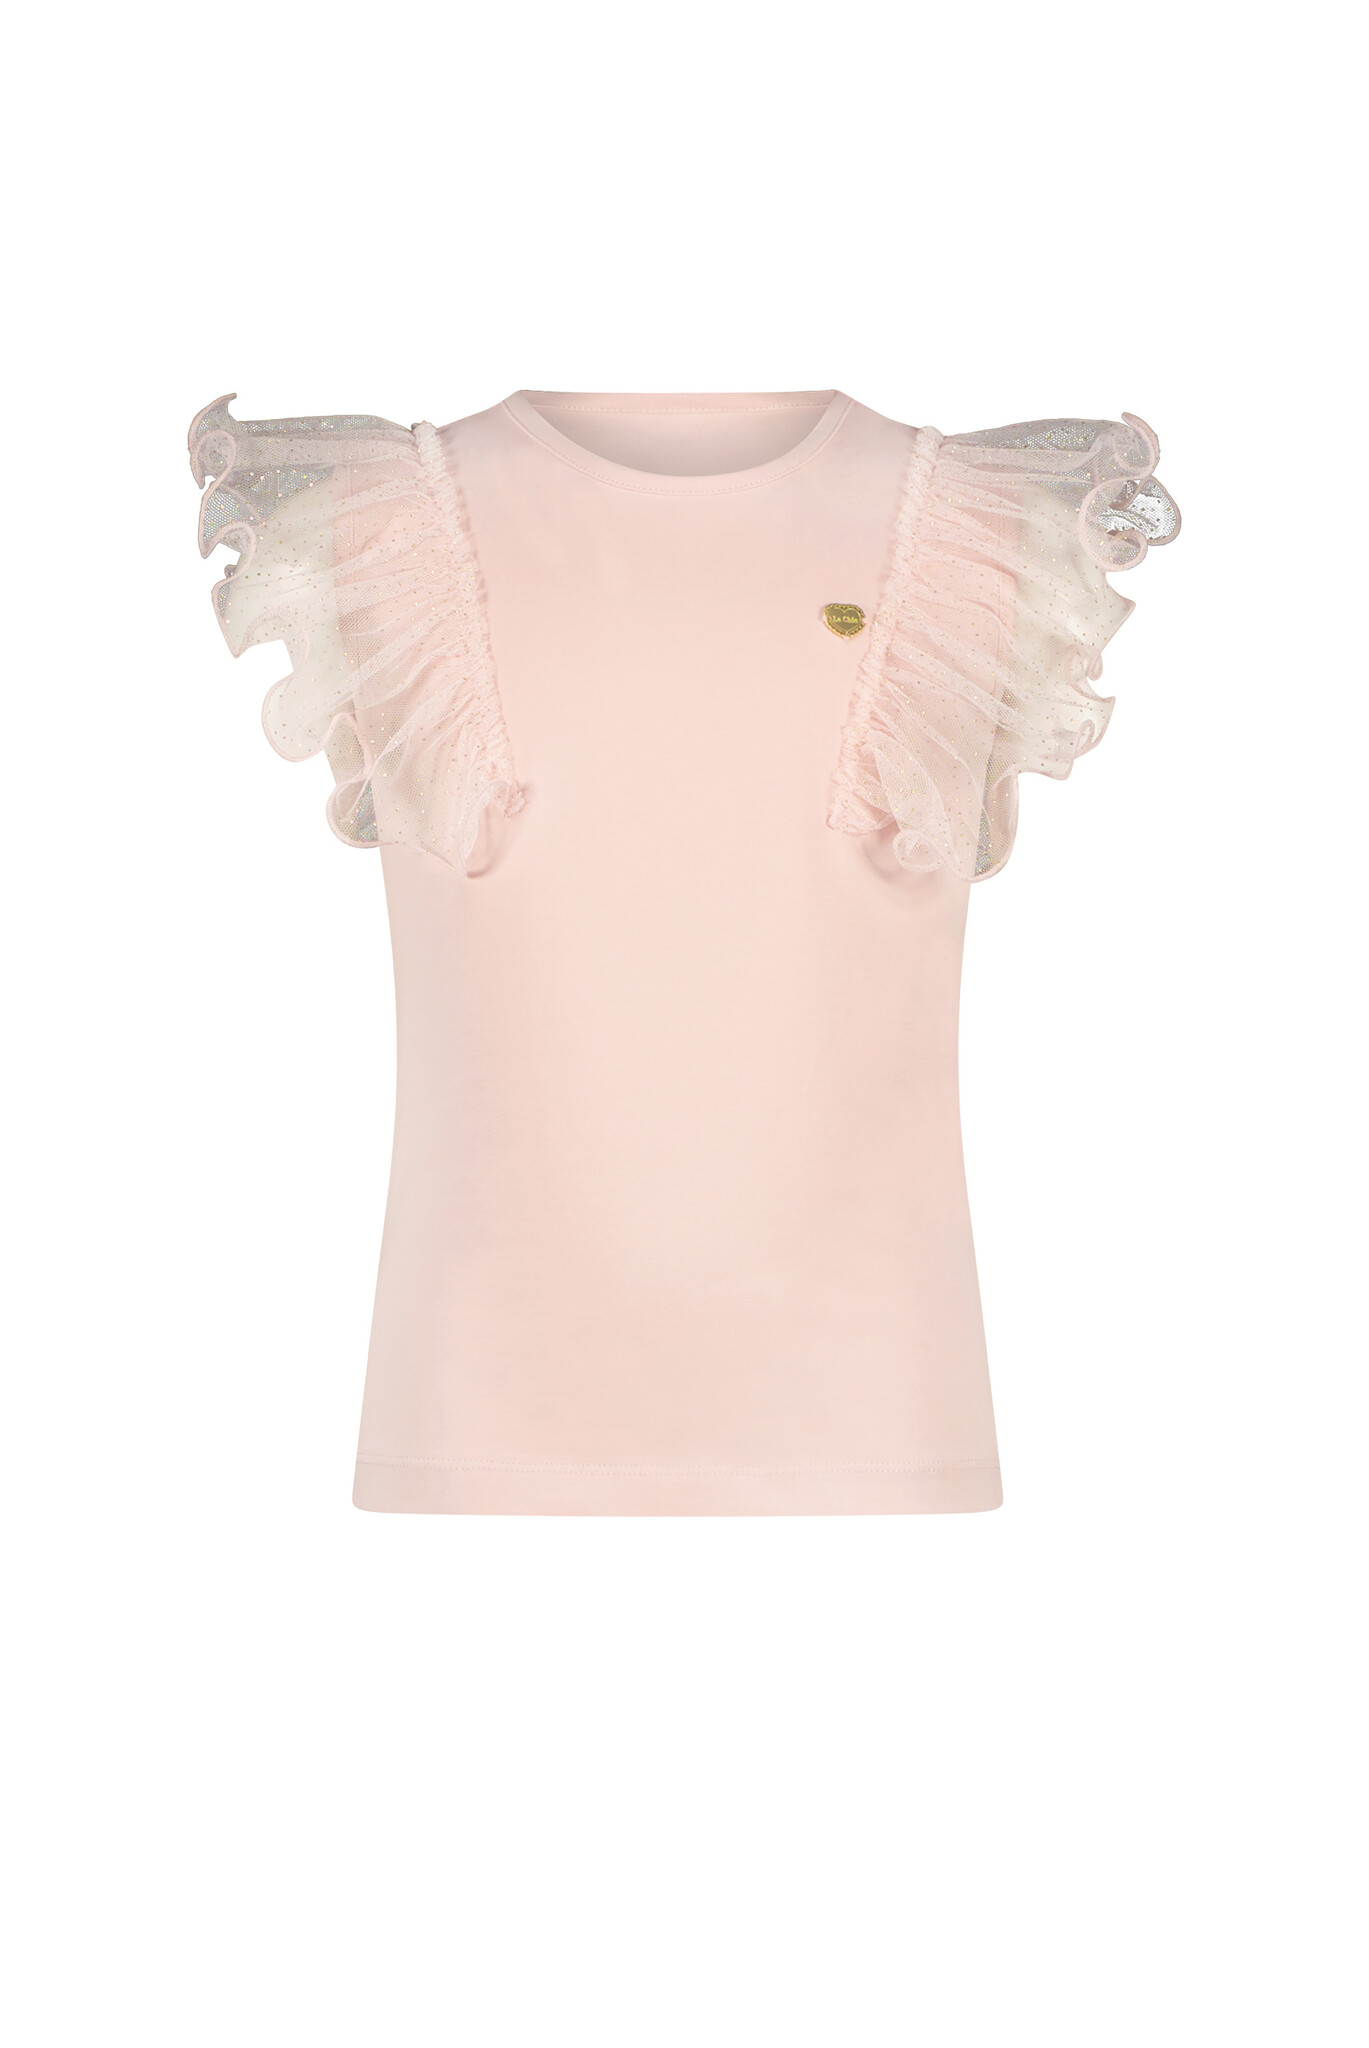 Le Chic C312-5402 Meisjes T-shirt - Baroque Pink - Maat 110